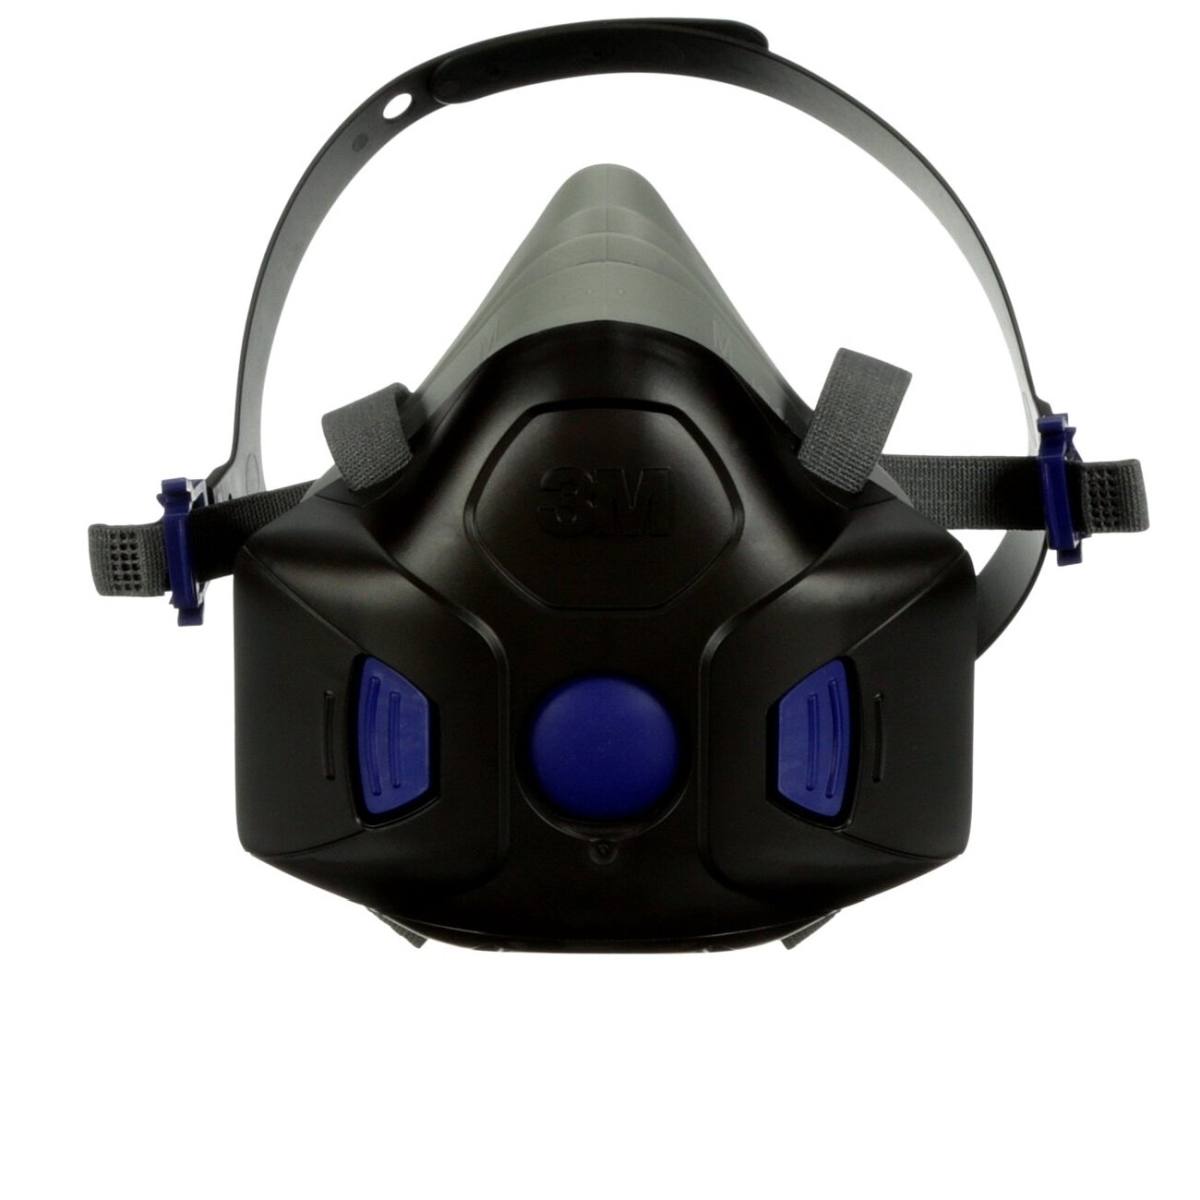 3M Secure Click media máscara HF-803 Slikon talla L